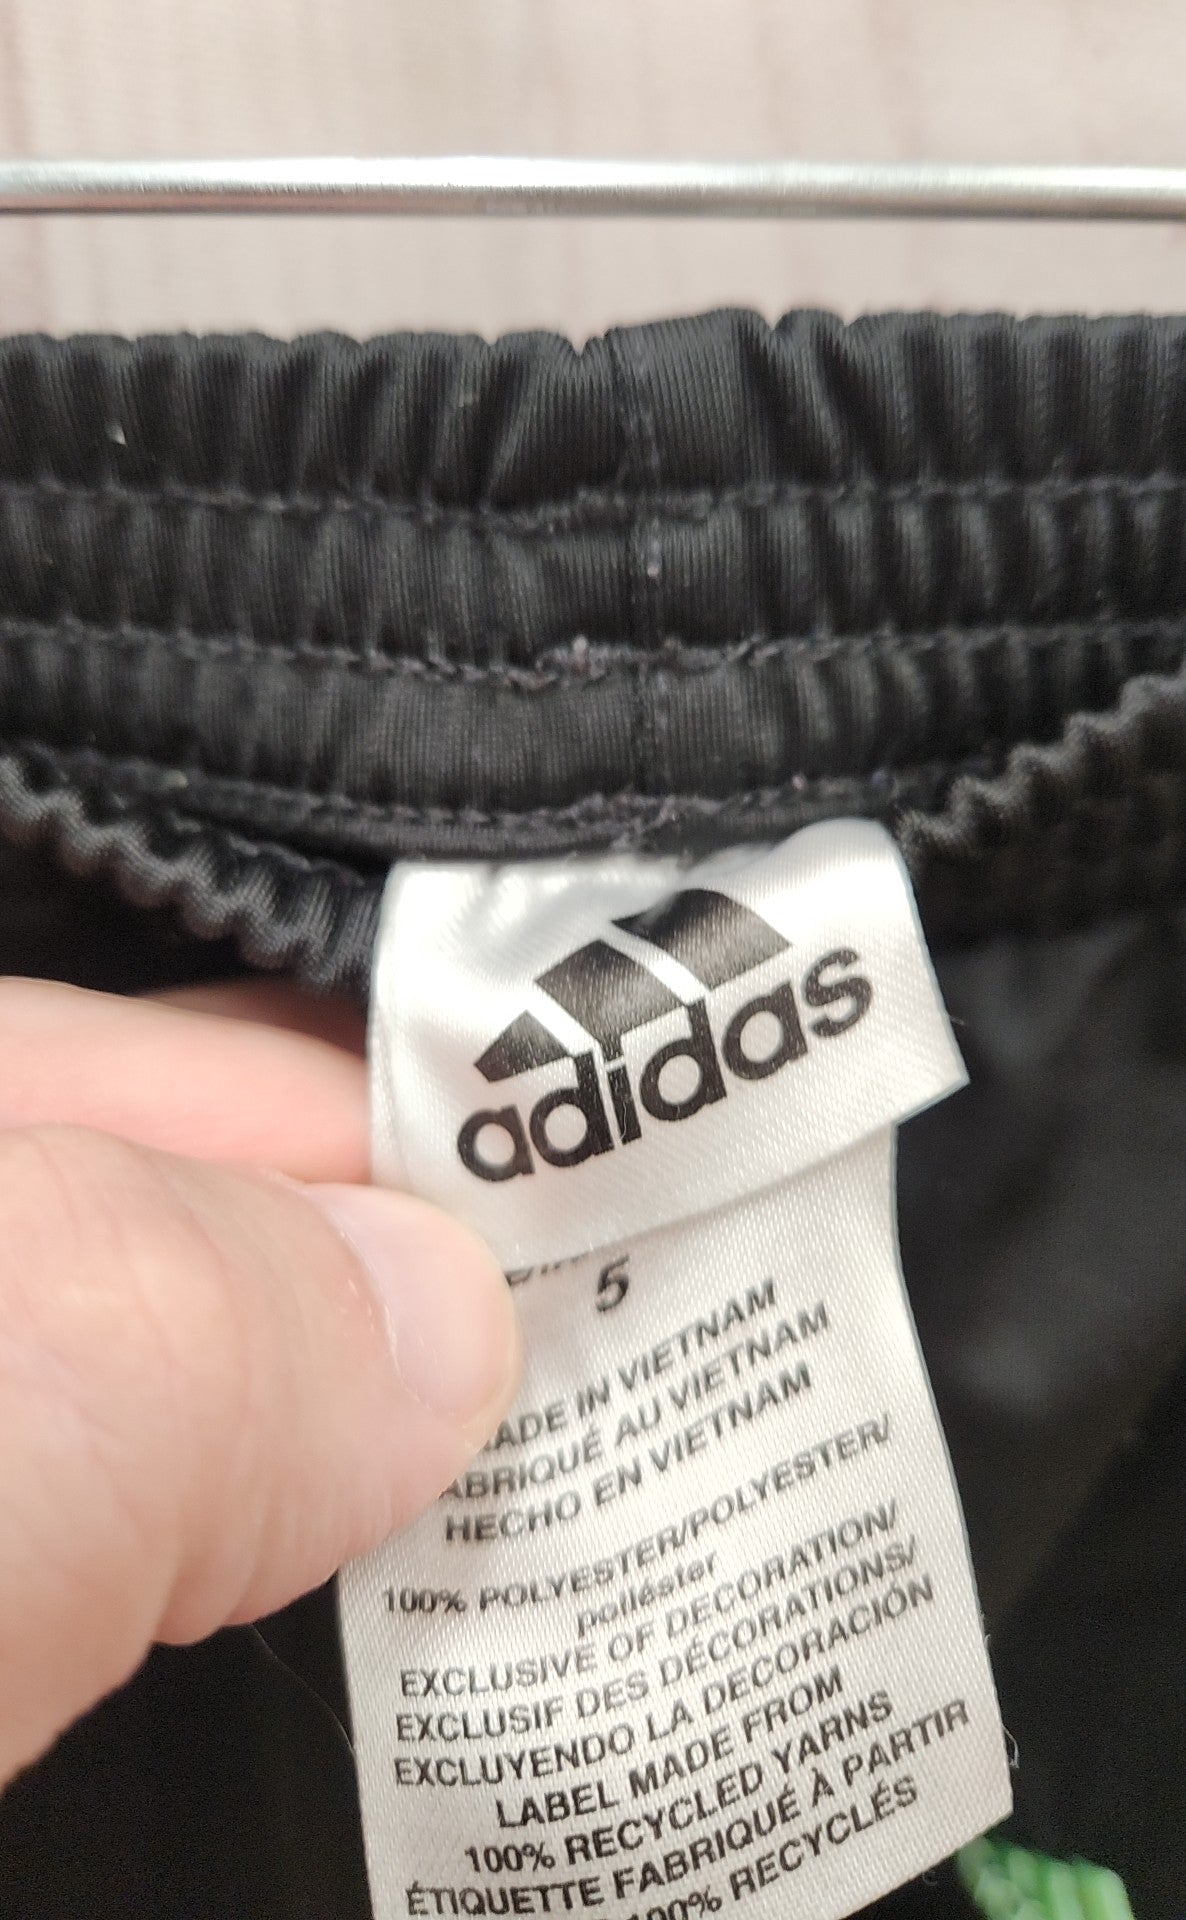 Adidas Boy's Size 5 Black Sweatpants